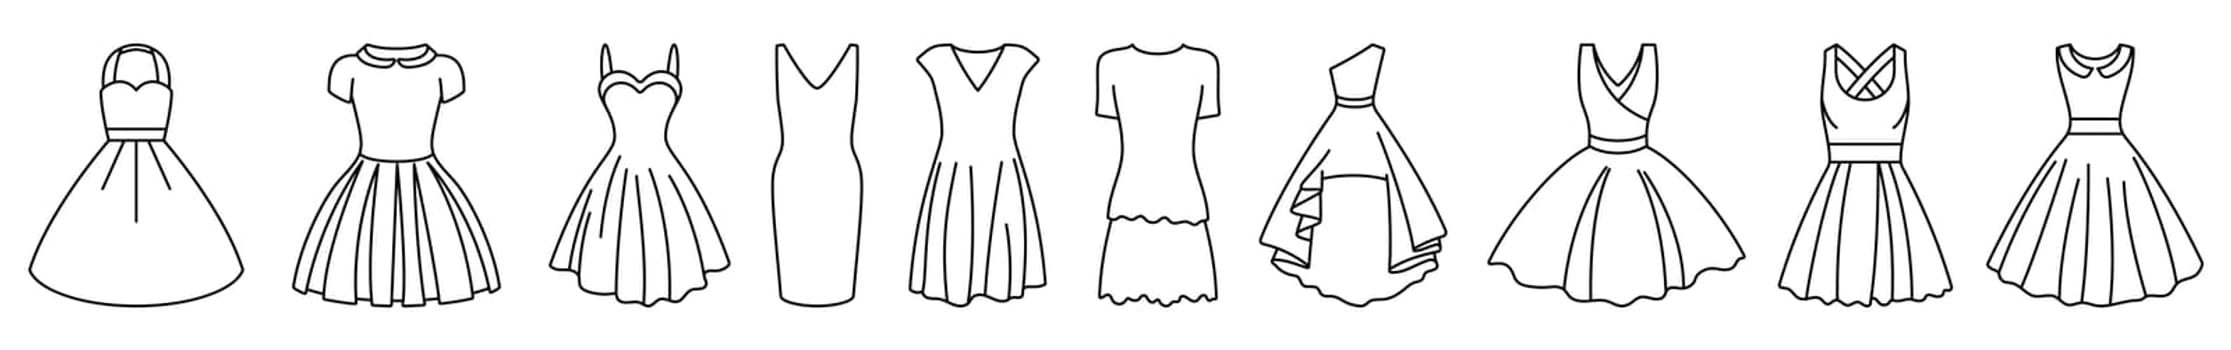 Women dress icon. Black linear dress icons set. Vector illustration.